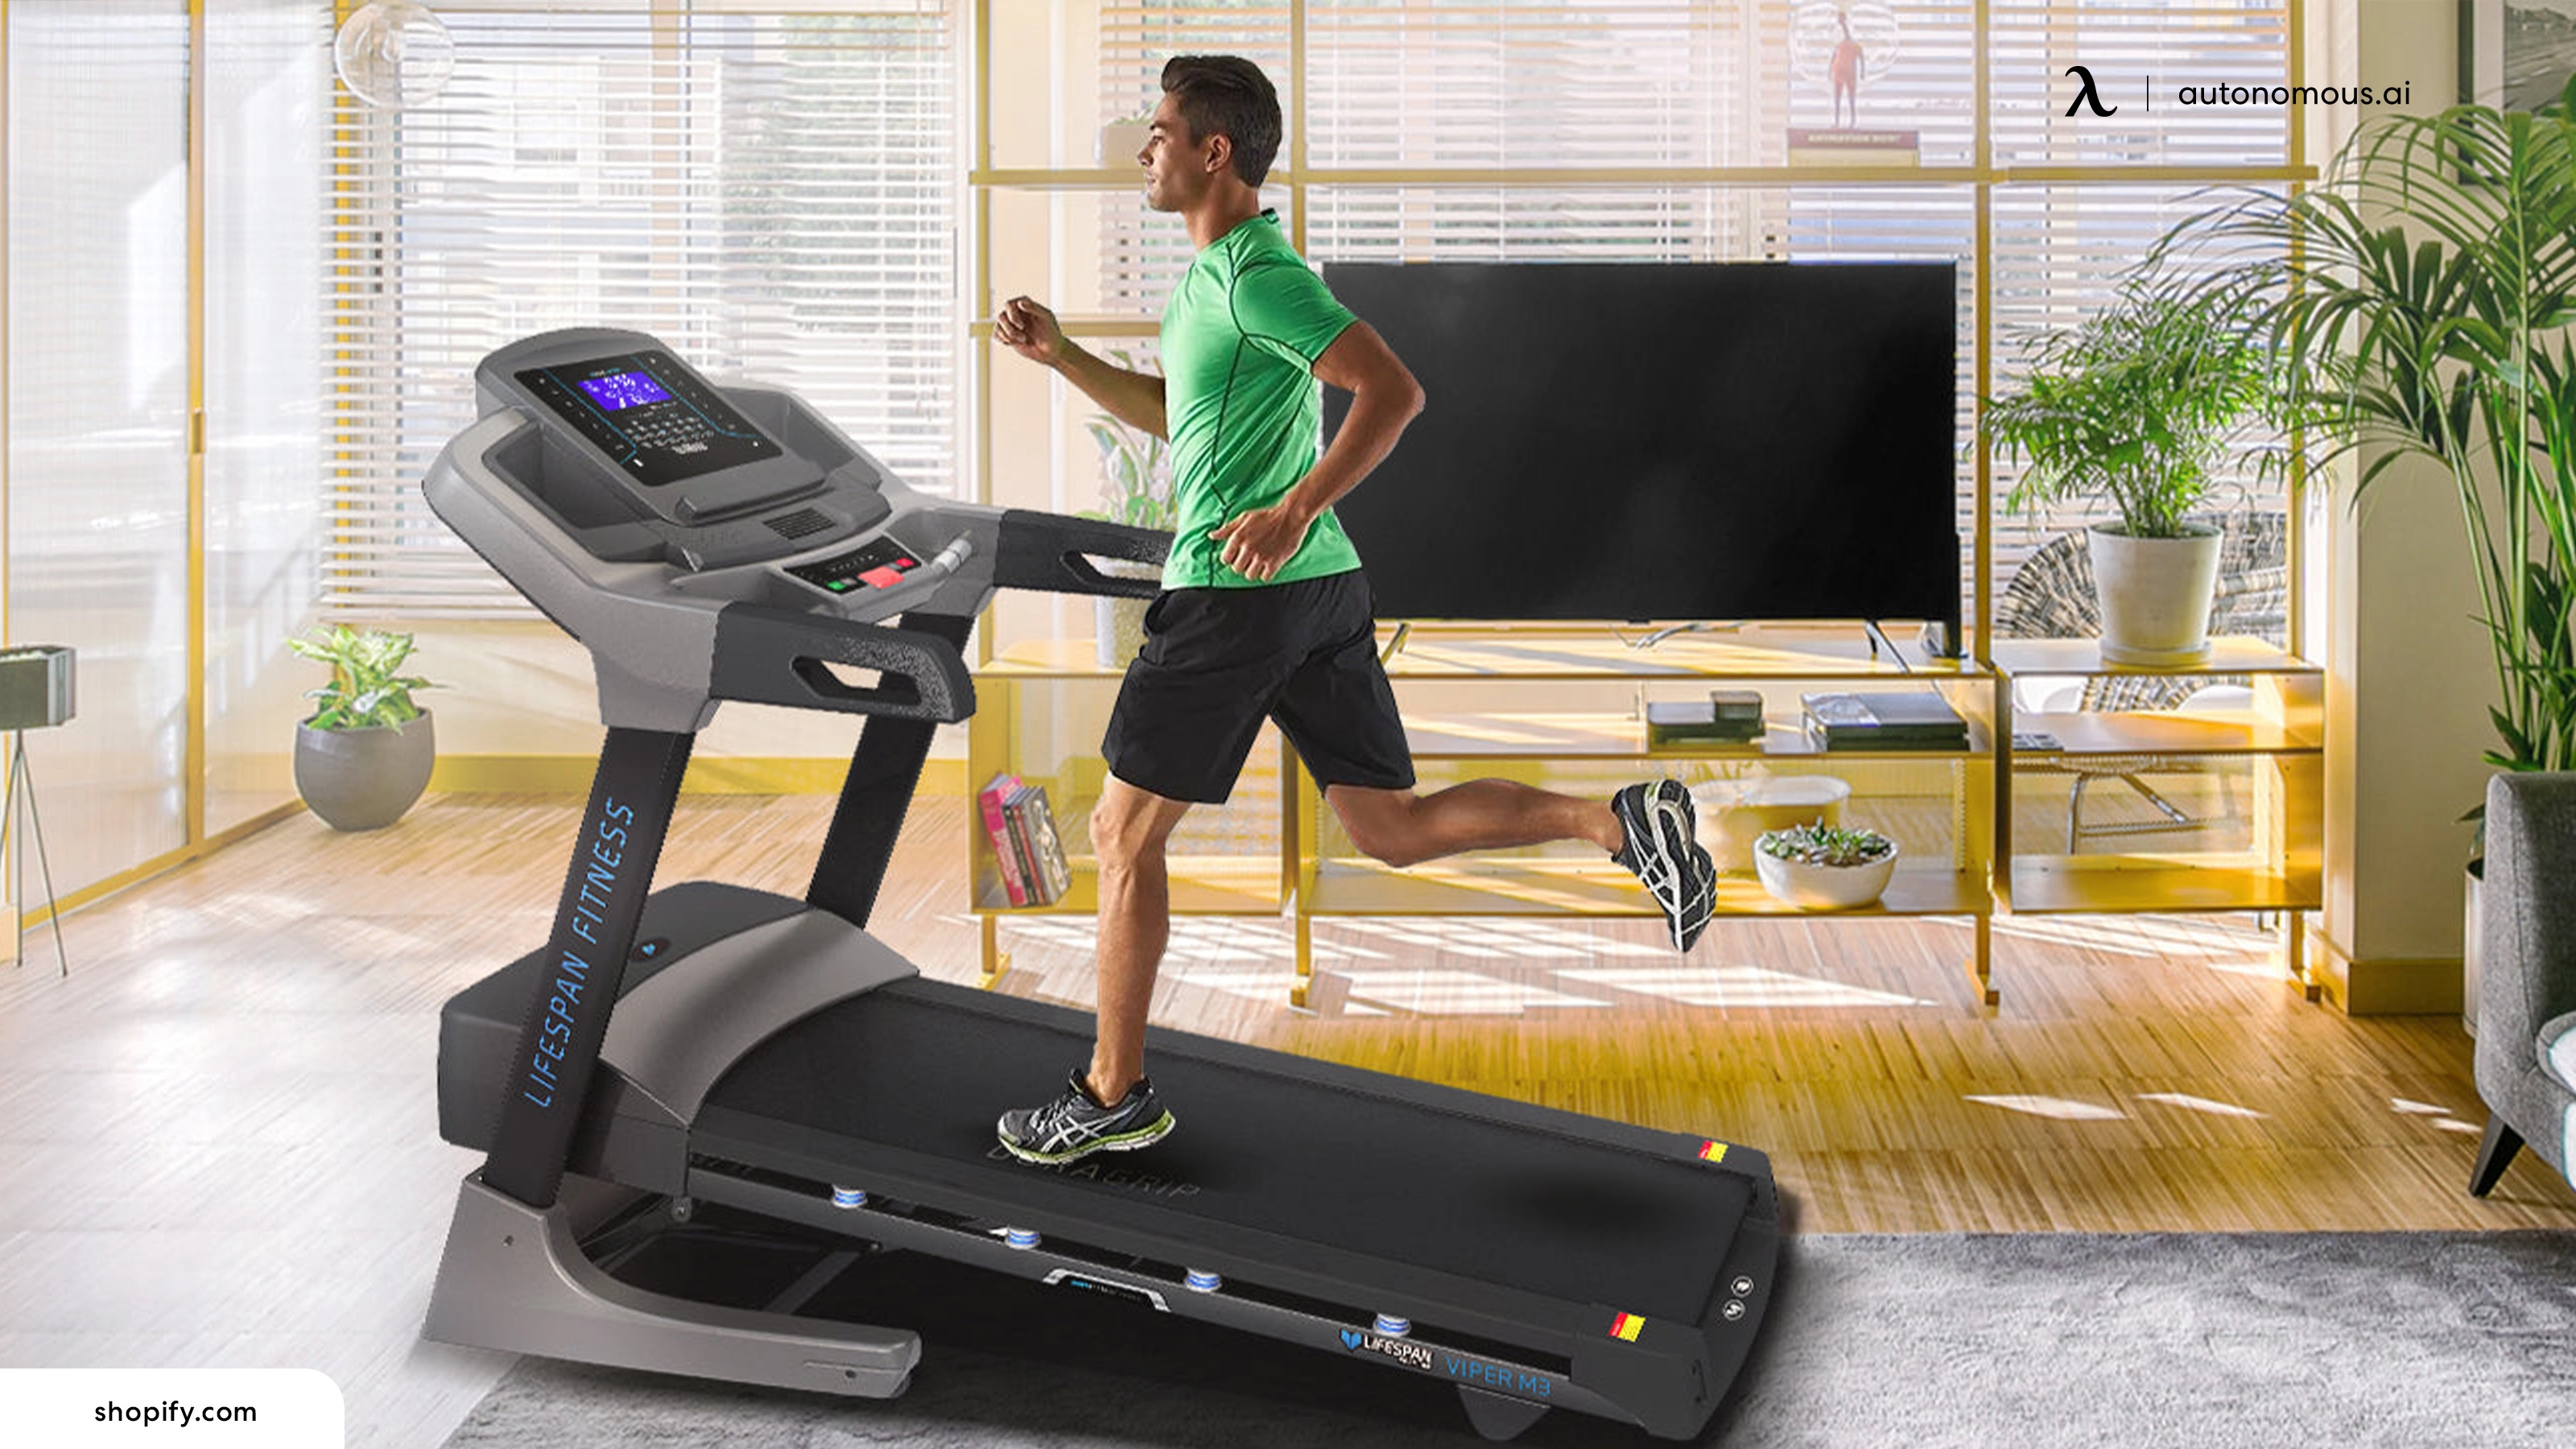 Treadmill 300 Lbs: Top 10 Picks of the Best Workout Equipment